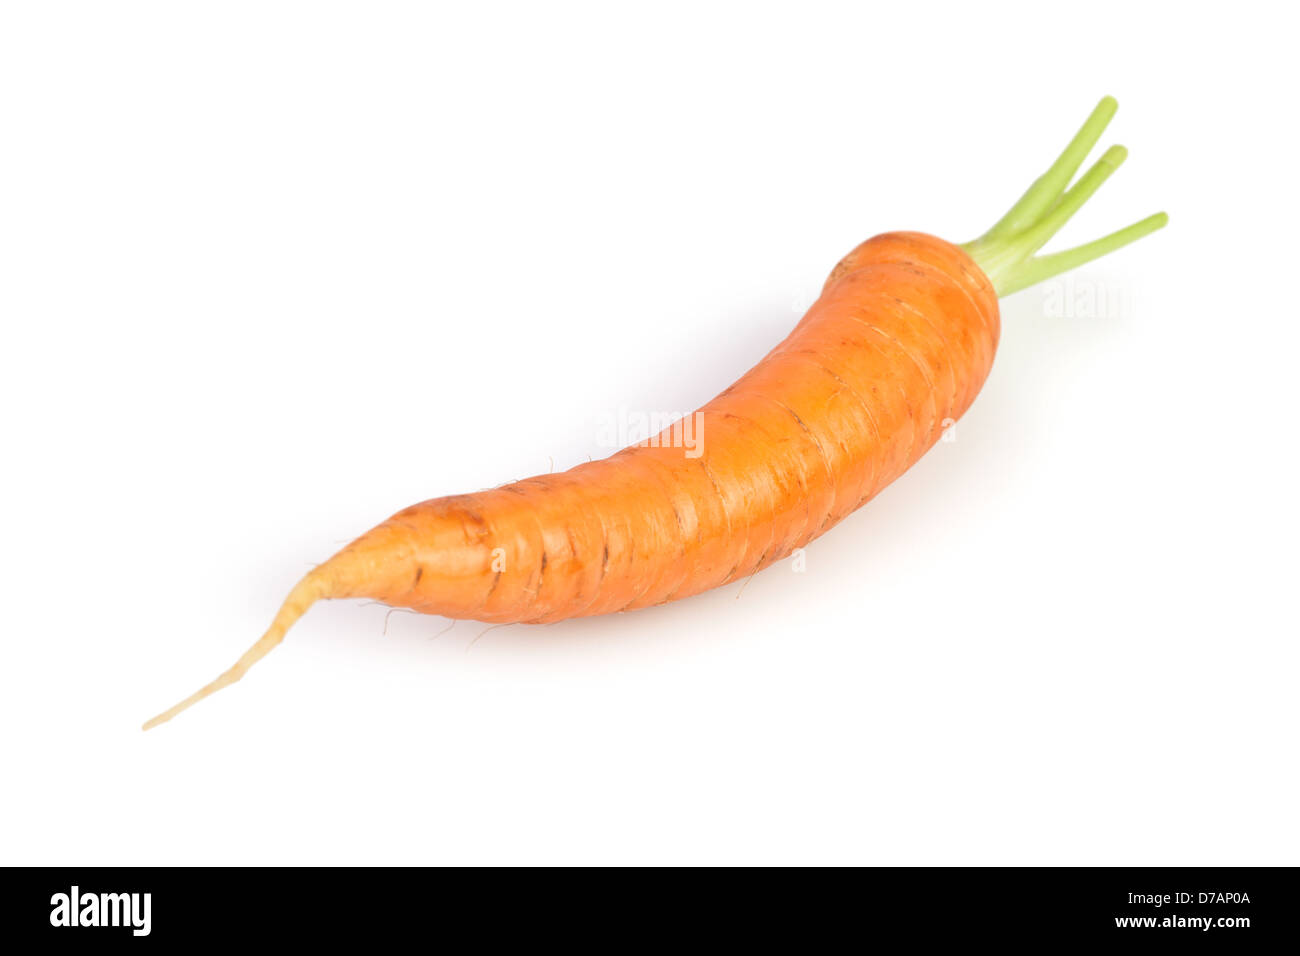 La carota uno su sfondo bianco Foto Stock